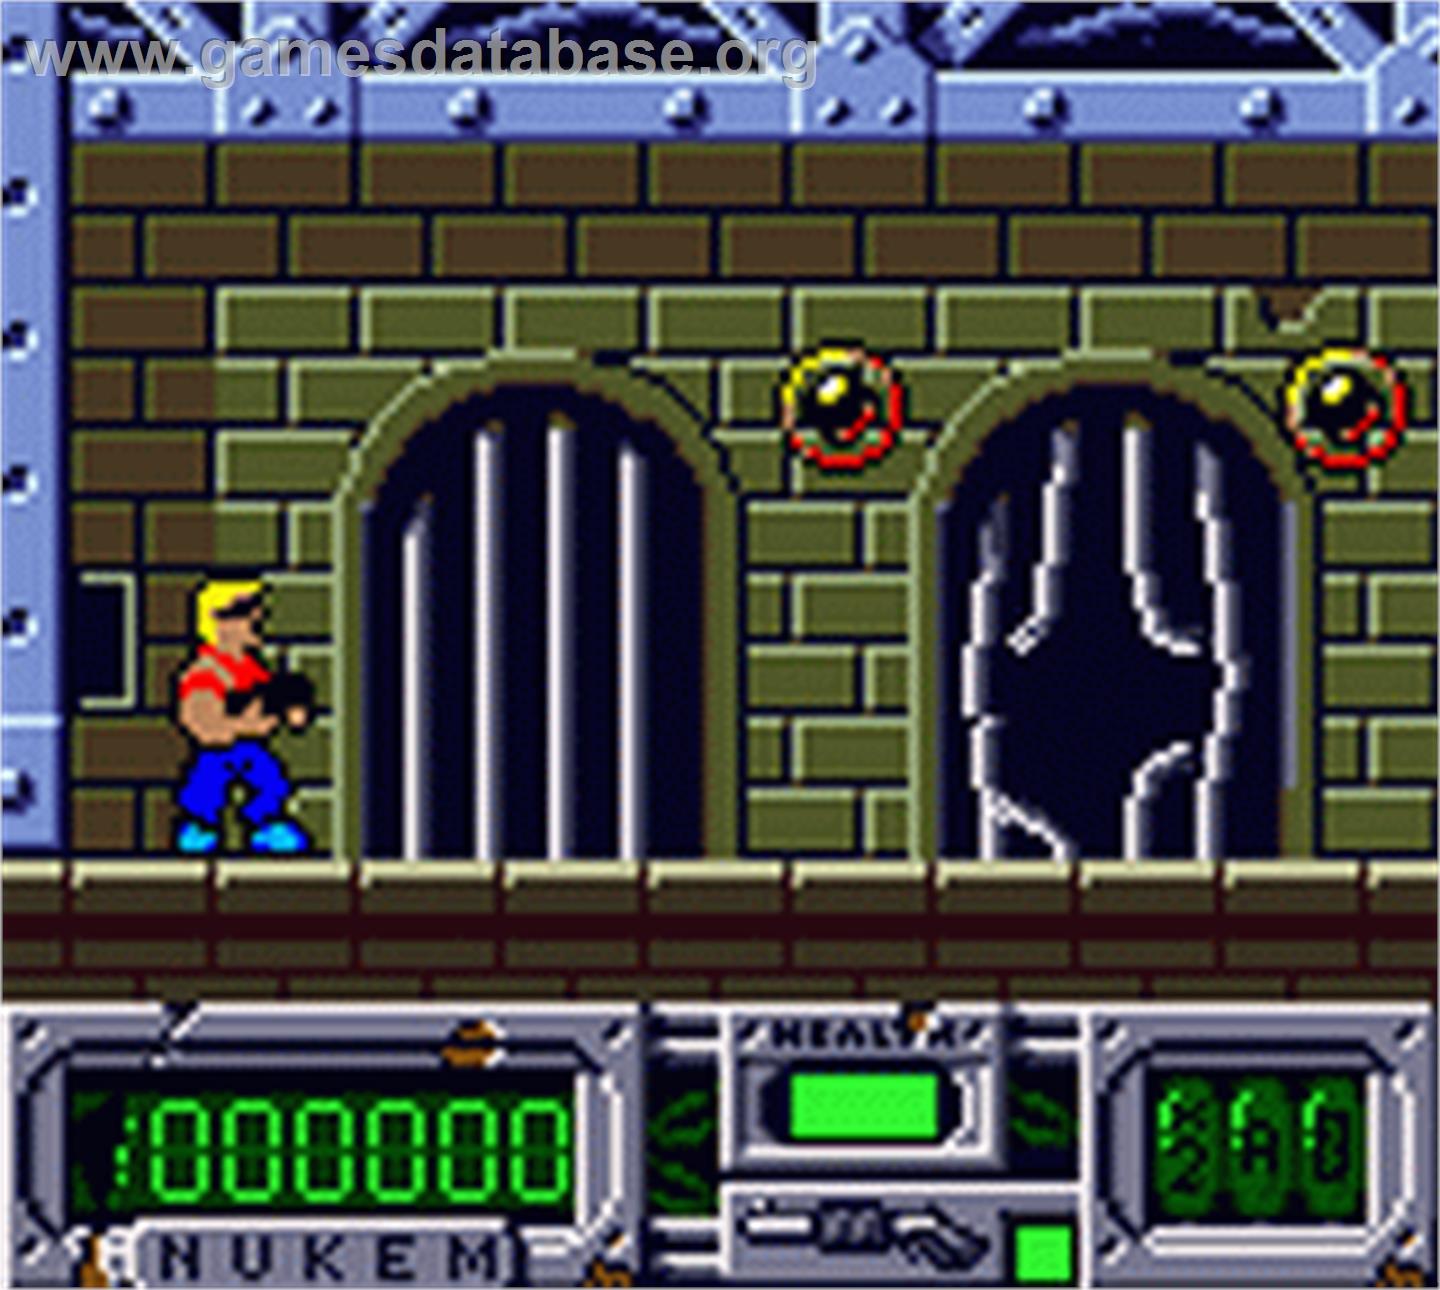 Duke Nukem - Nintendo Game Boy Color - Artwork - In Game